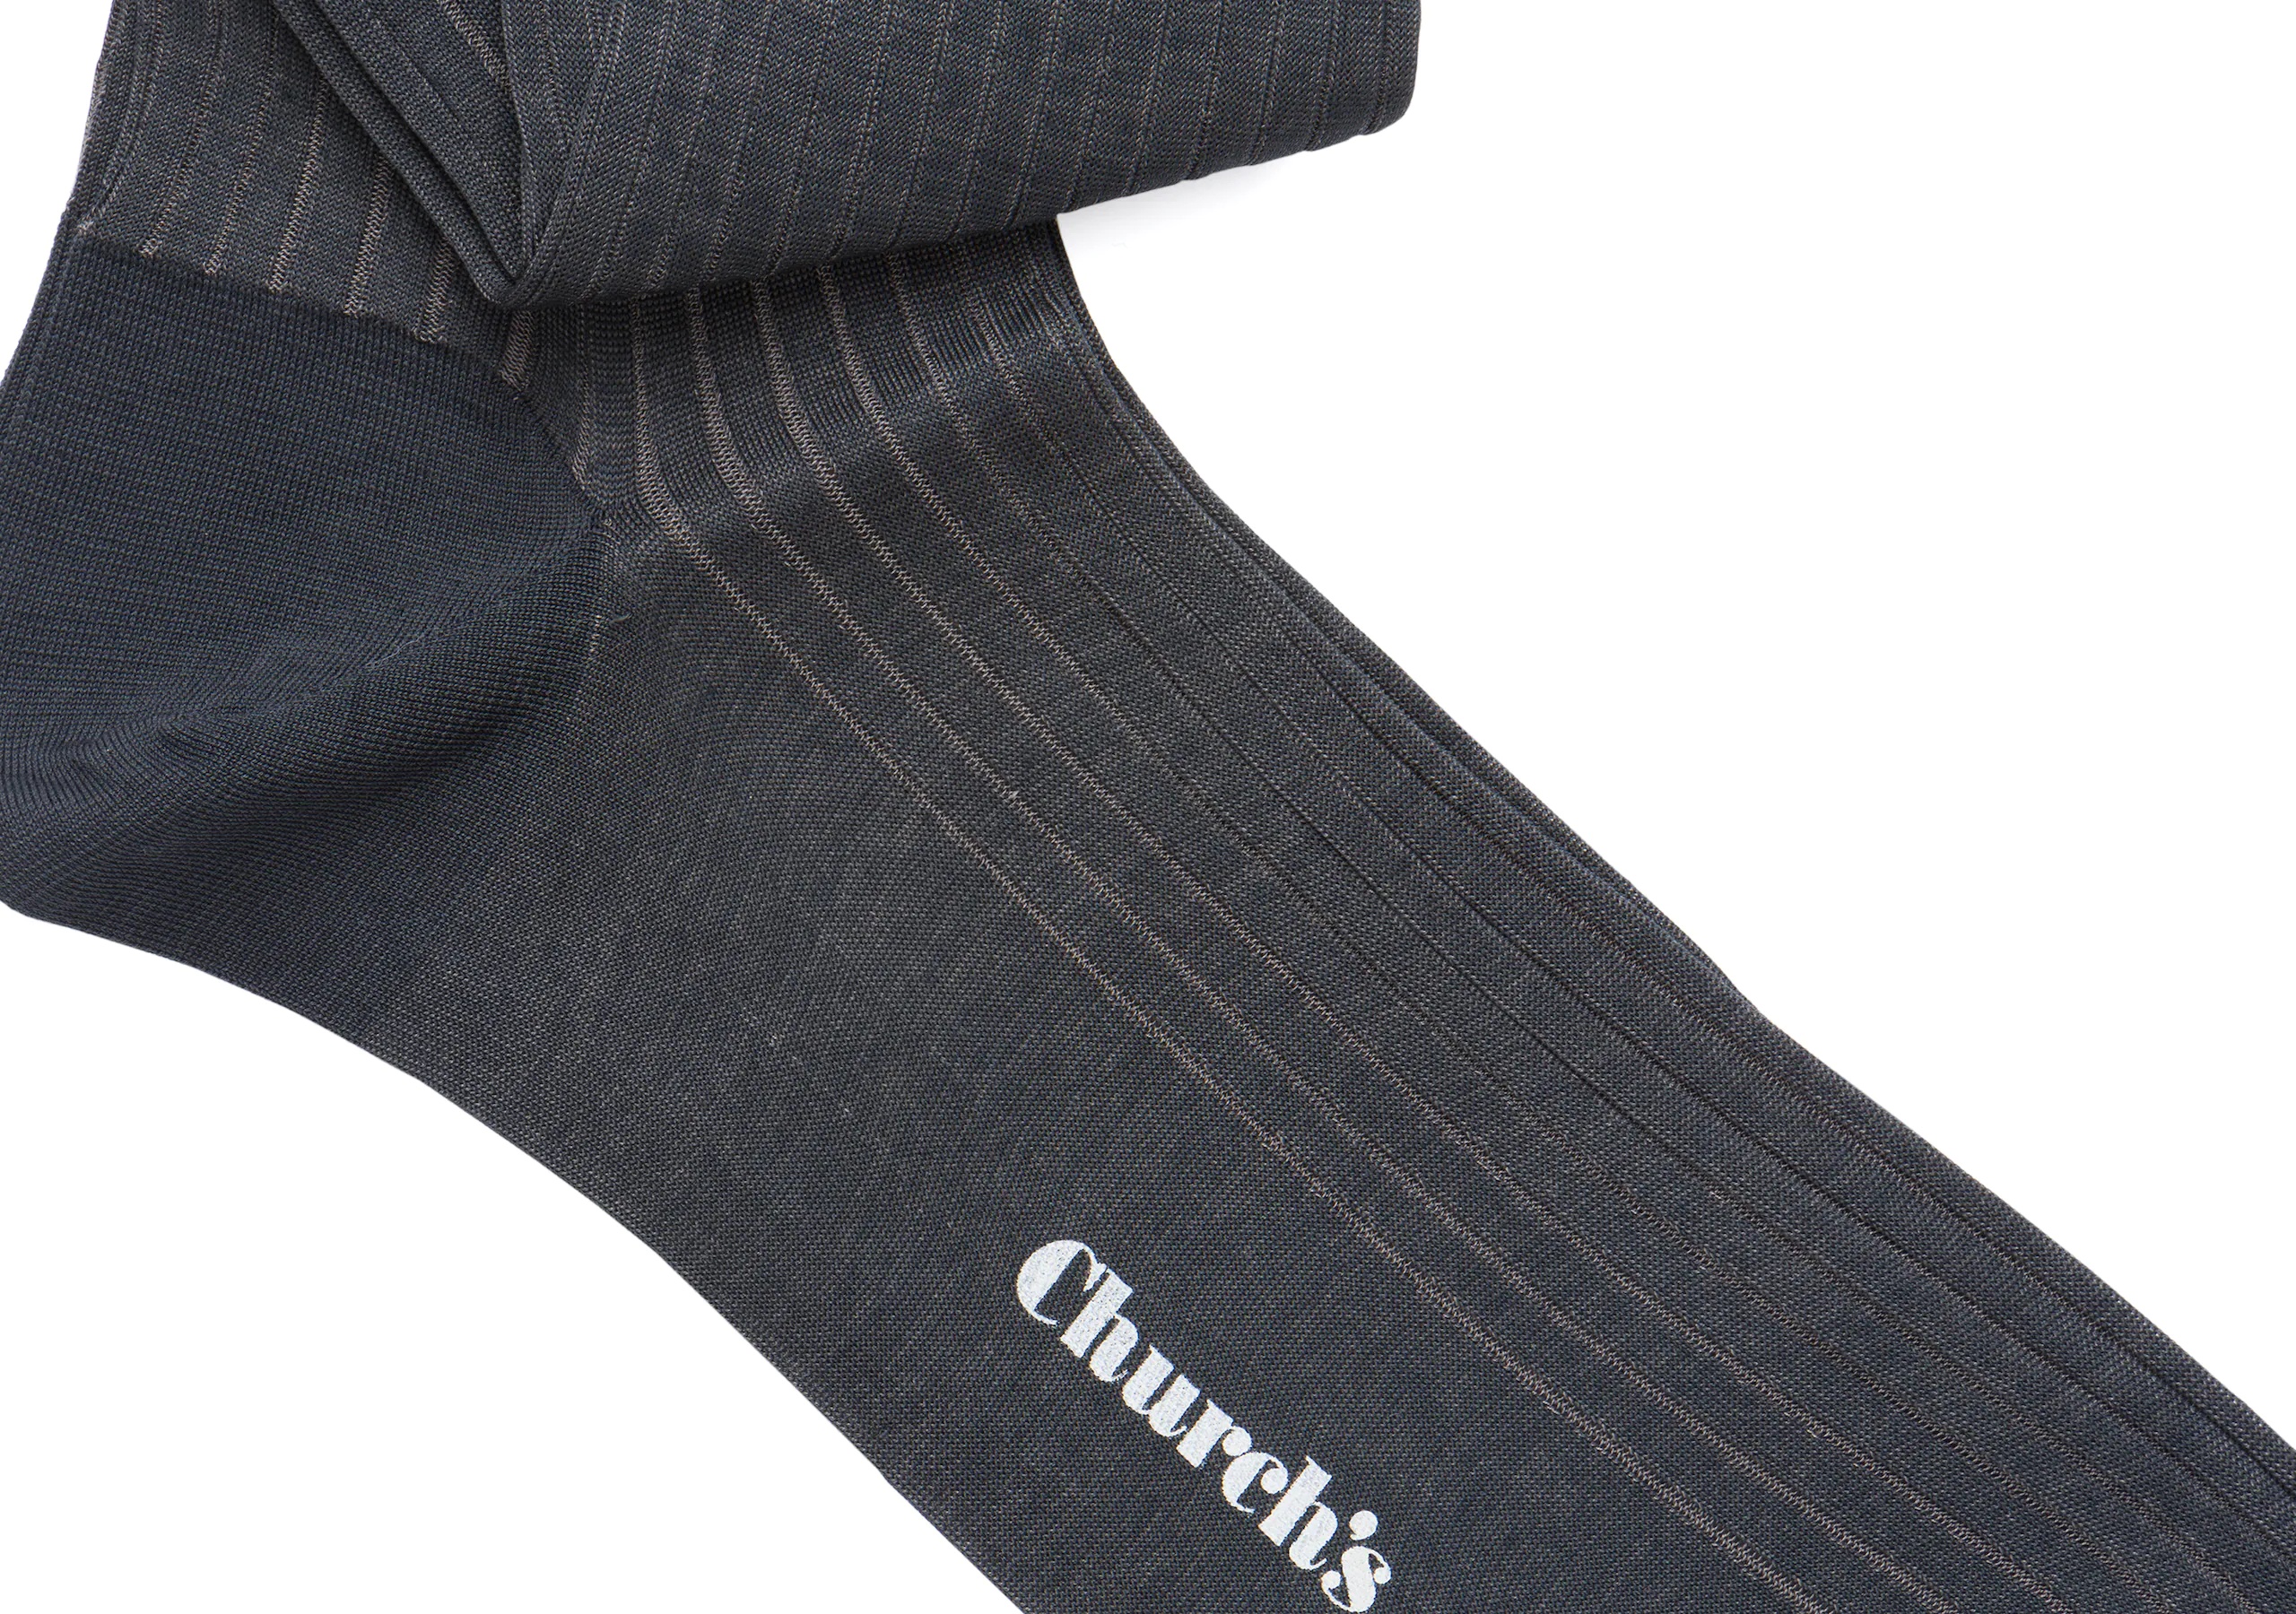 Contrast ribbed socks
Cotton Ribbed Short Grey - 2